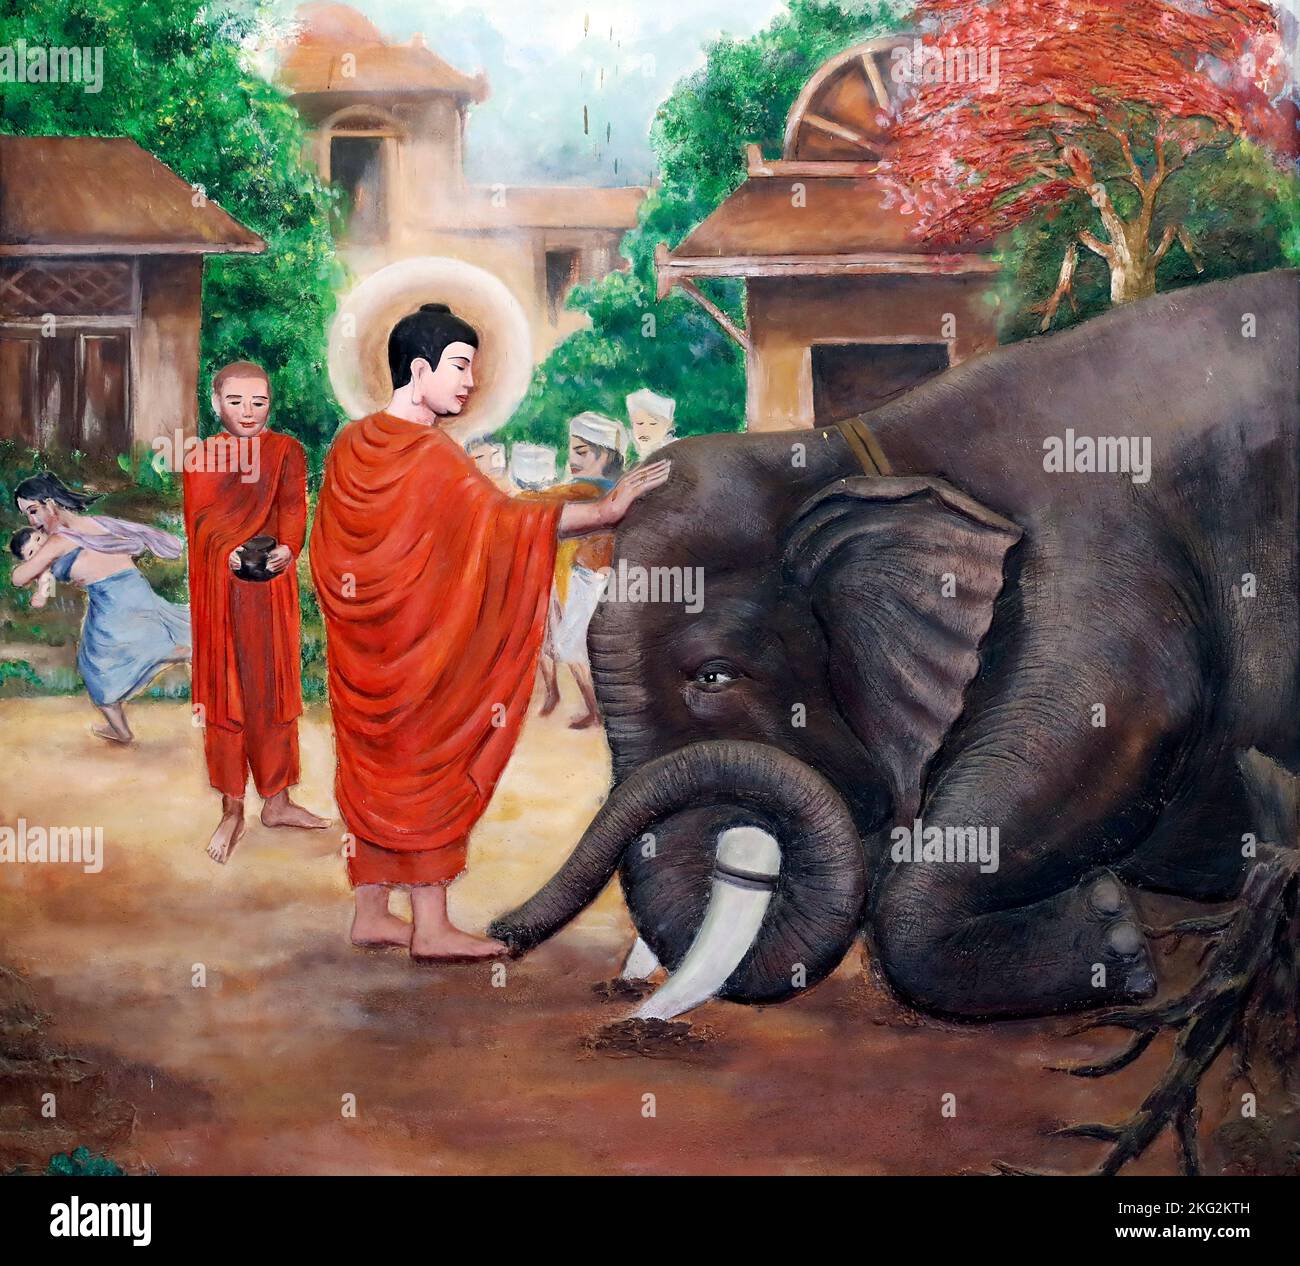 Ba Vang buddhist temple. Life of the Buddha. A wild elephant tamed by loving kindness. Uong Bi. Vietnam. Stock Photo